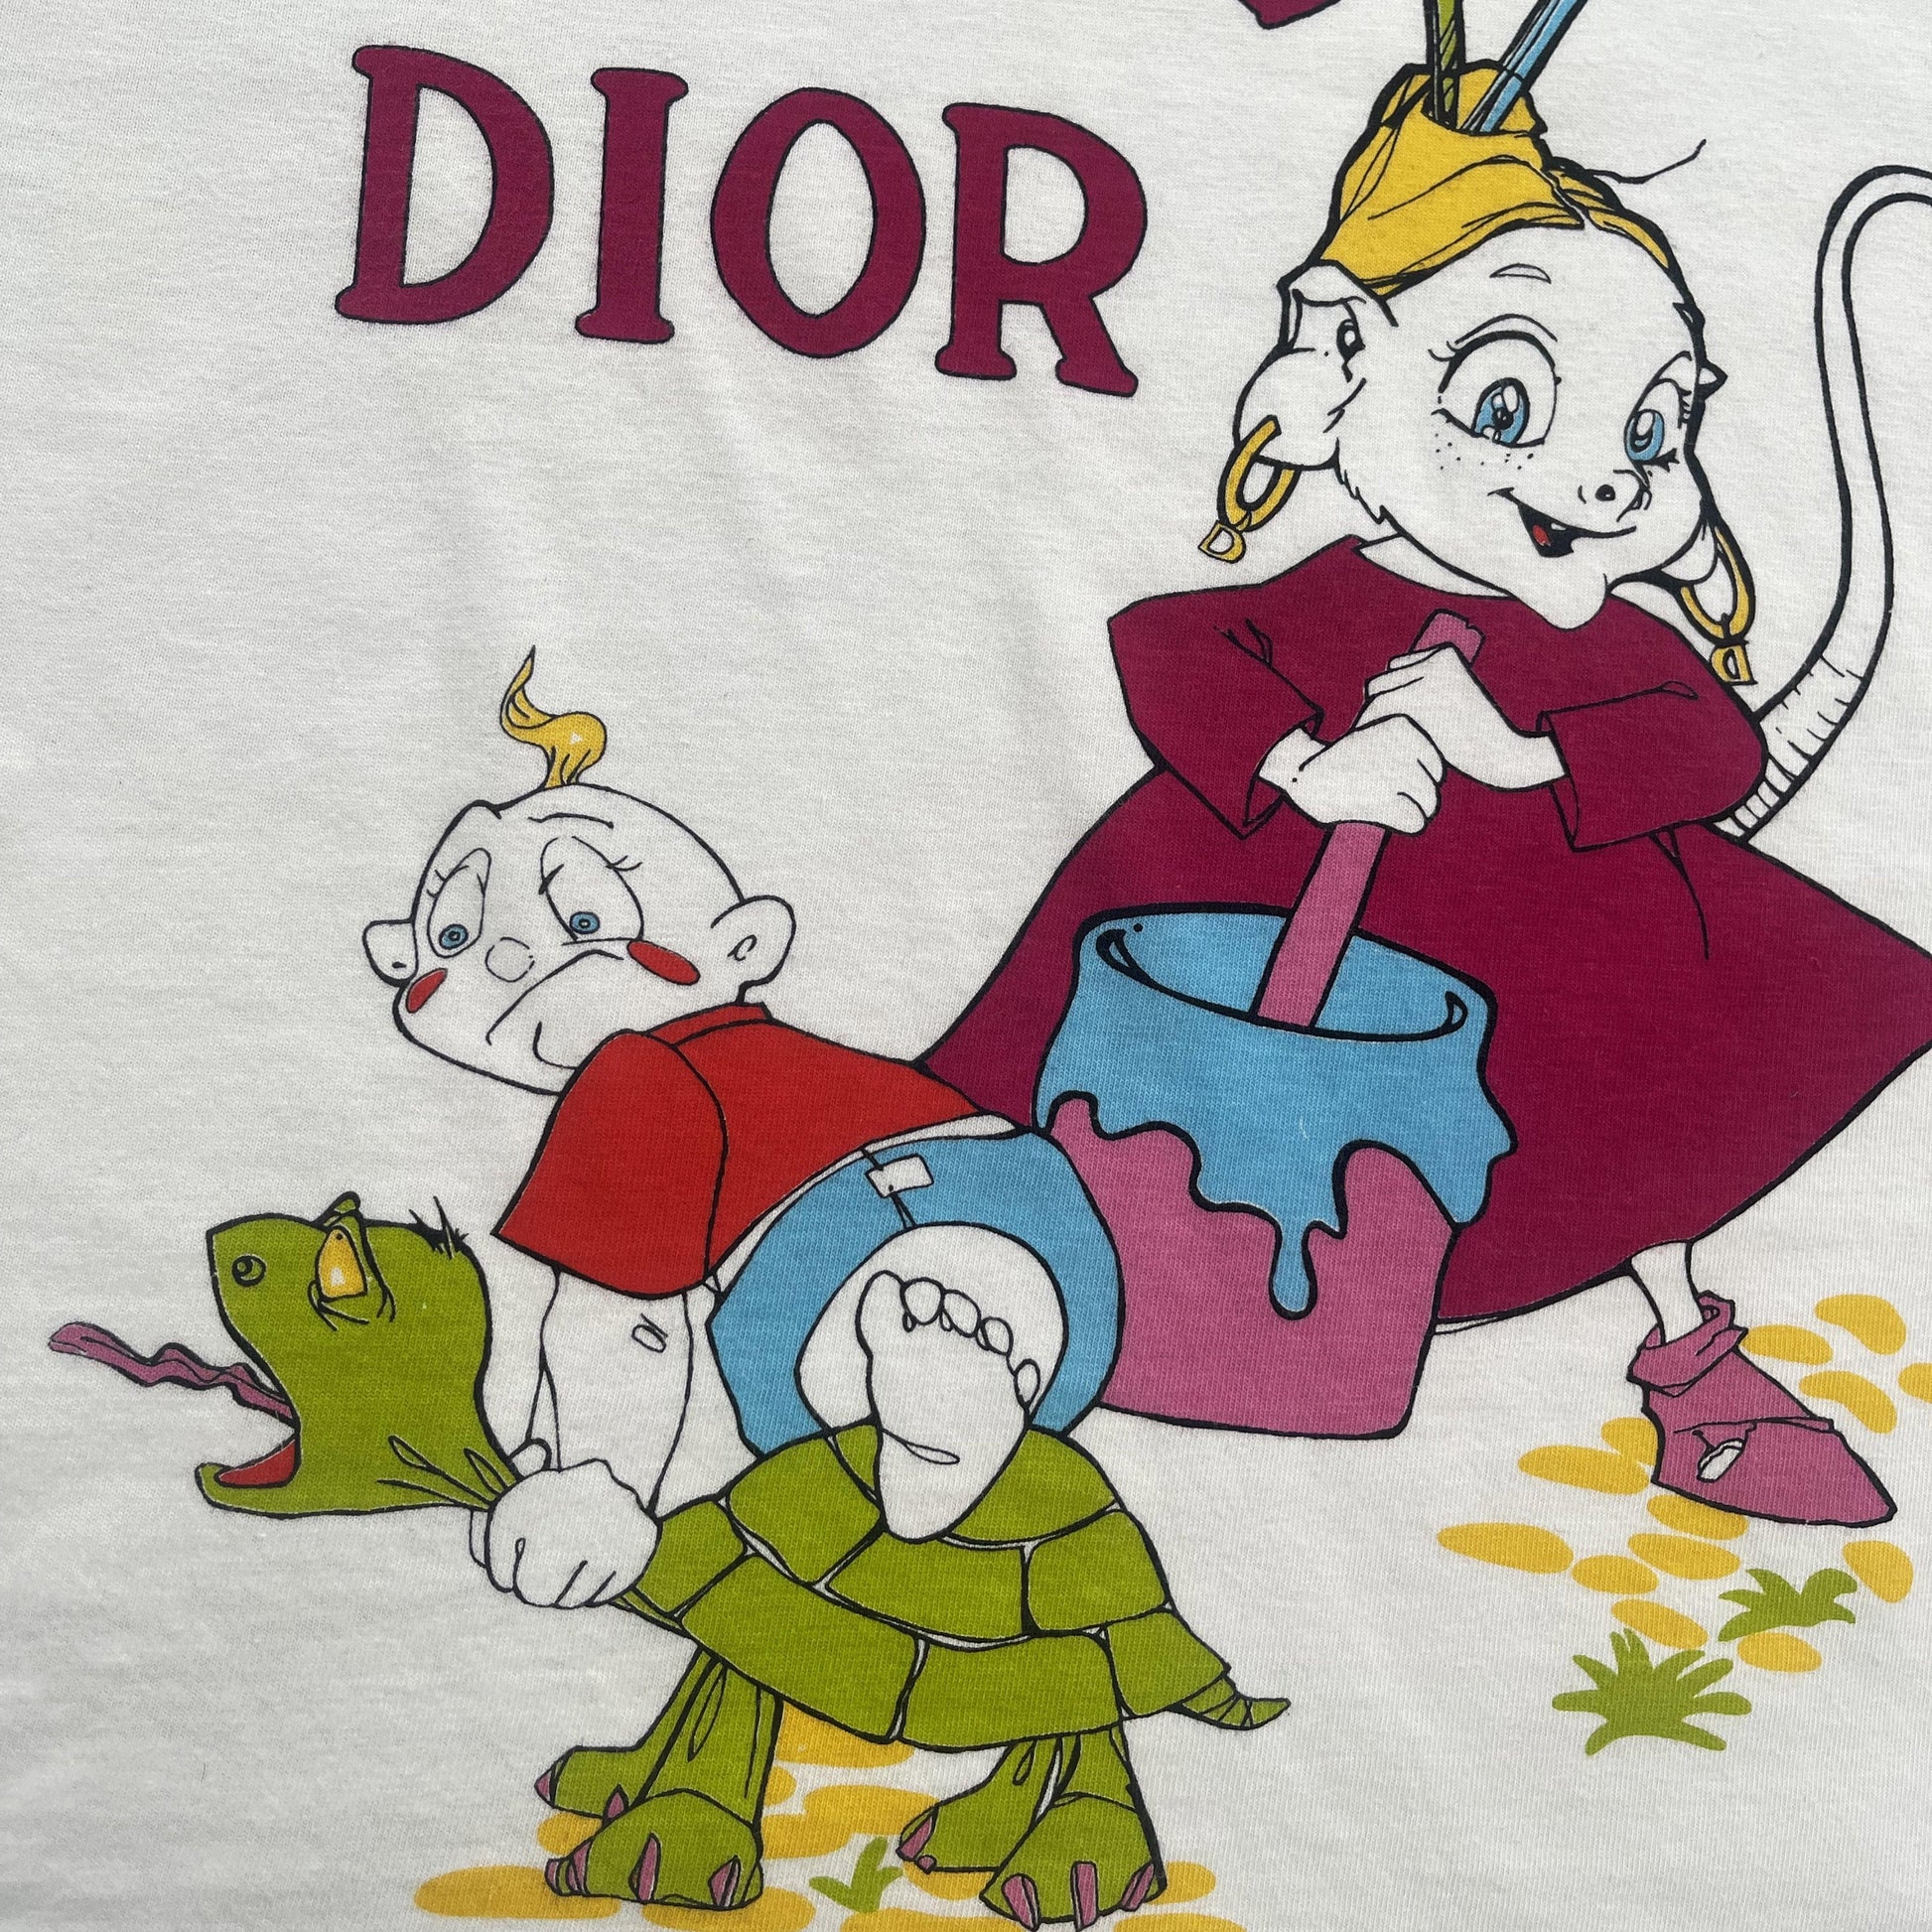 Christian Dior Cartoon T-Shirt Summer Holiday Cruise 2002 - Known Source